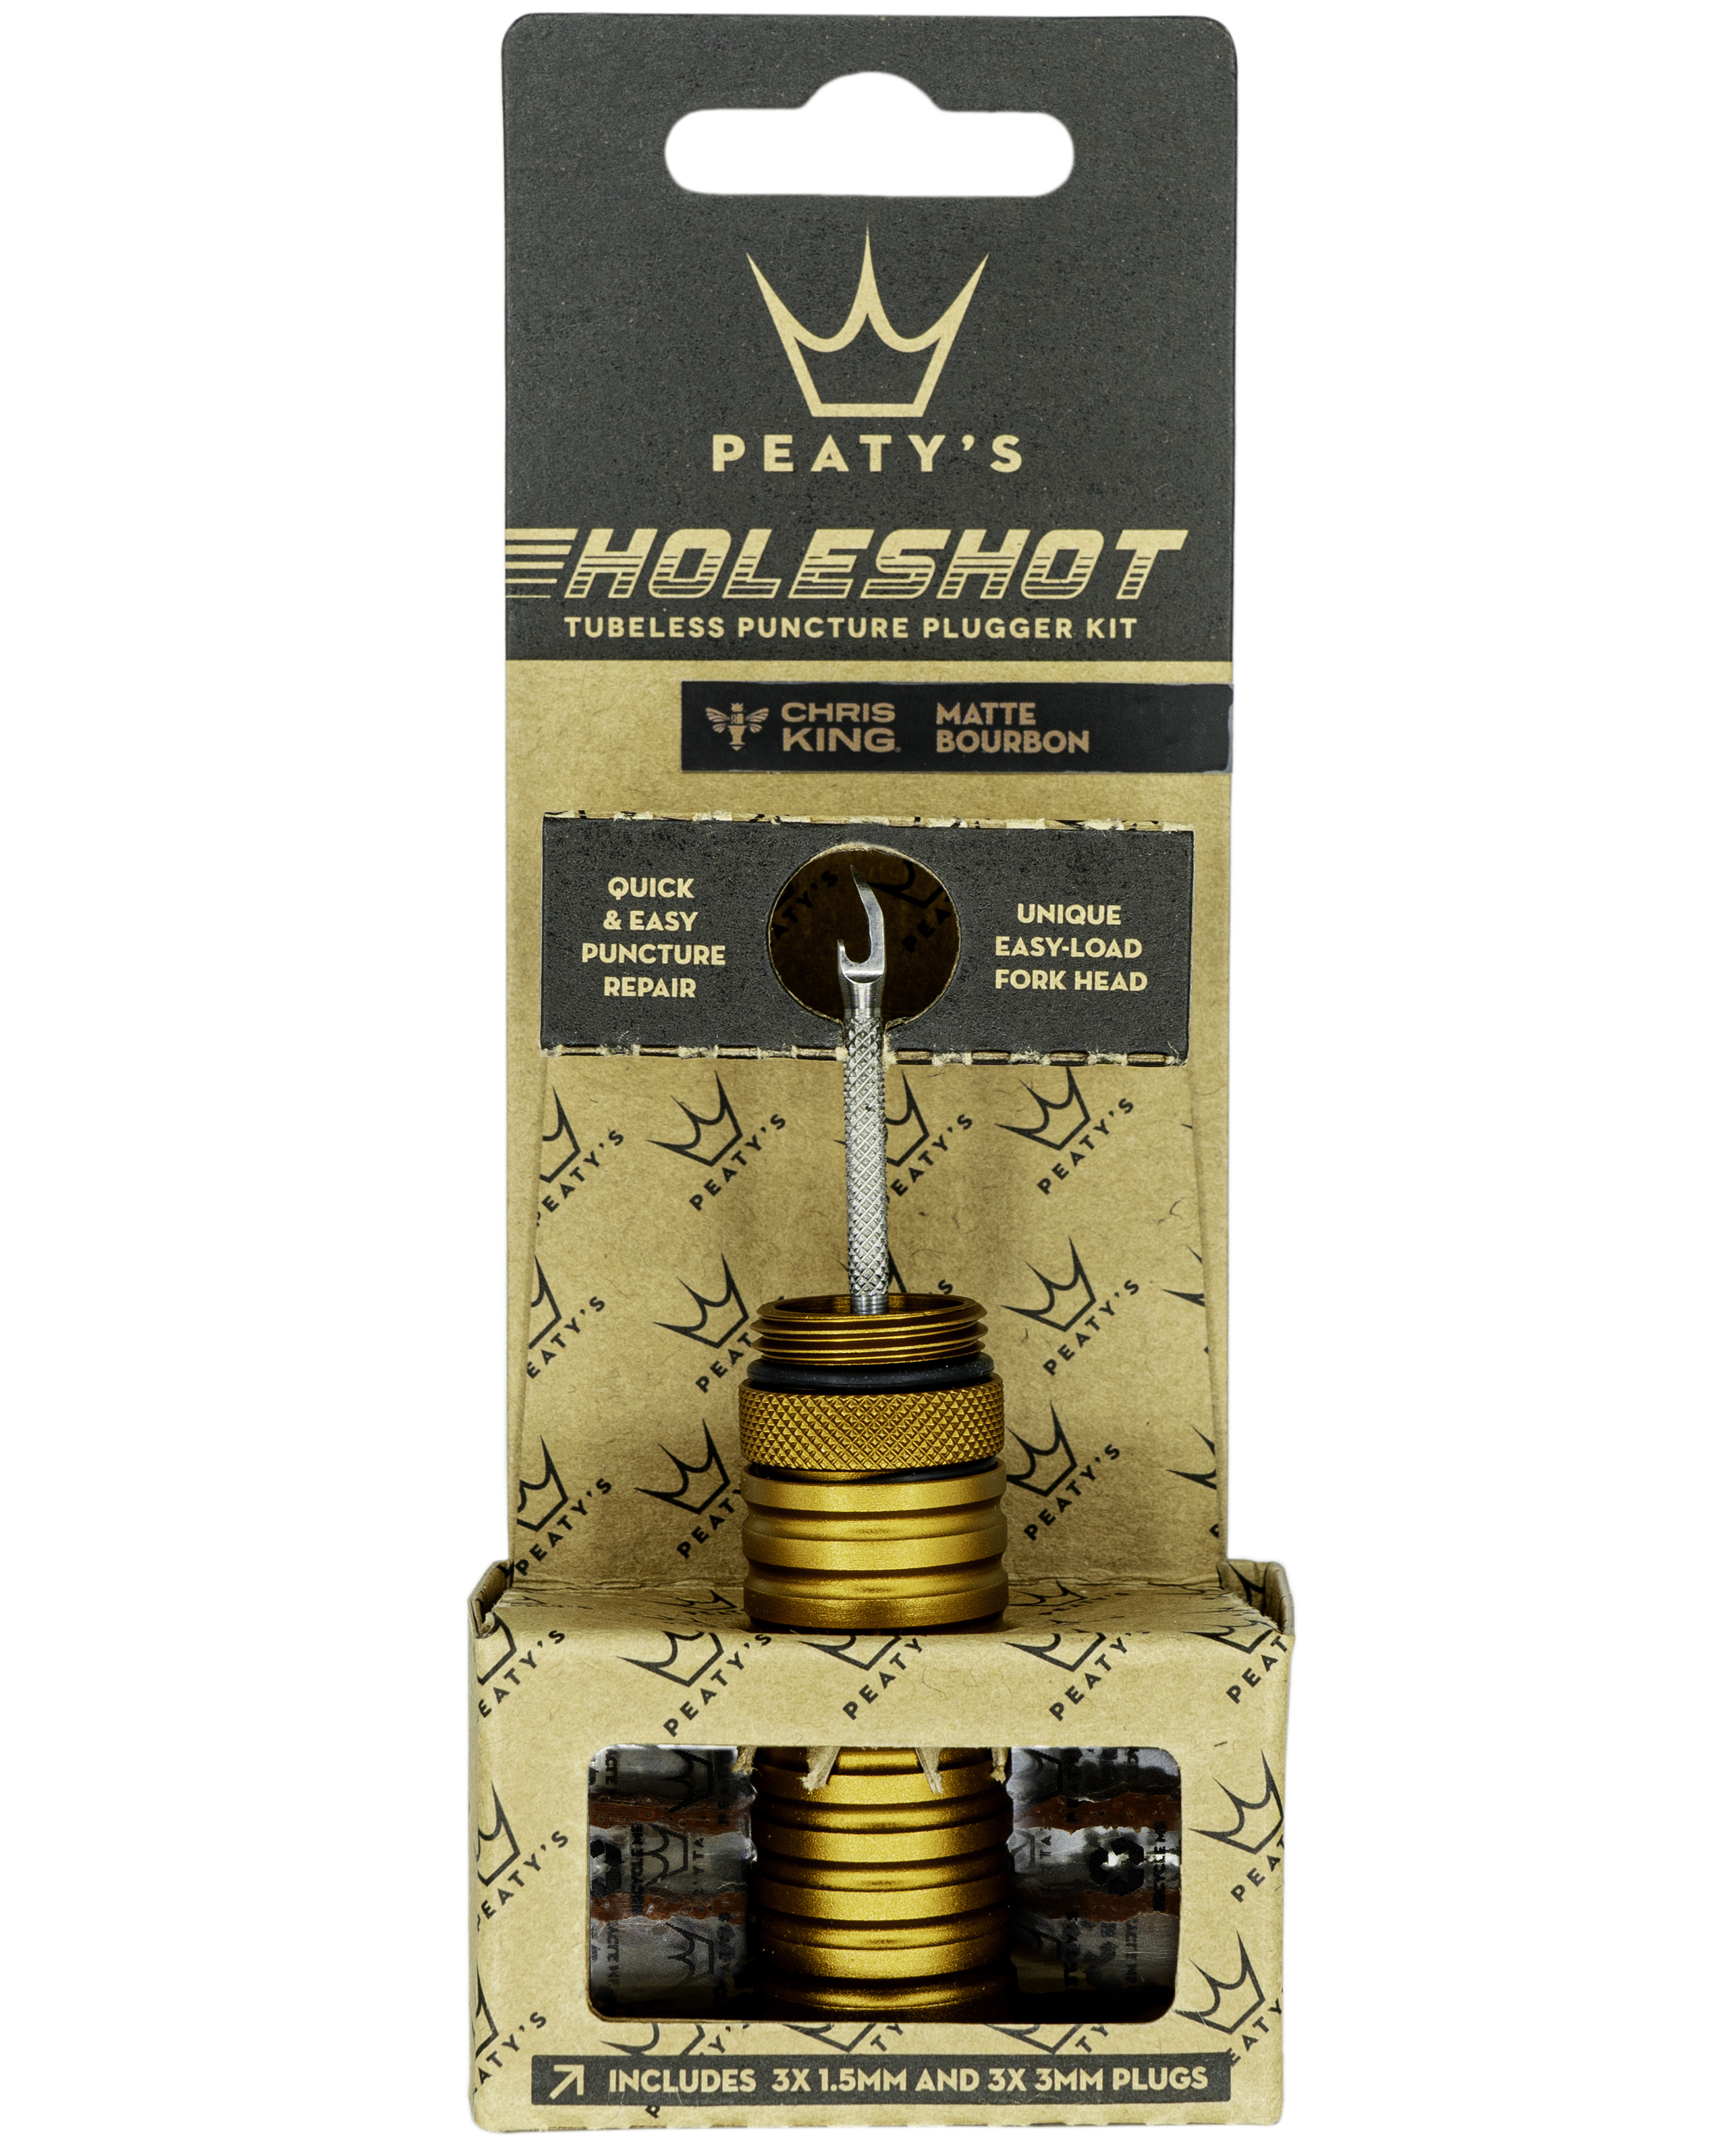 Holeshot Tyre Plugger - Matte Bourbon.jpg